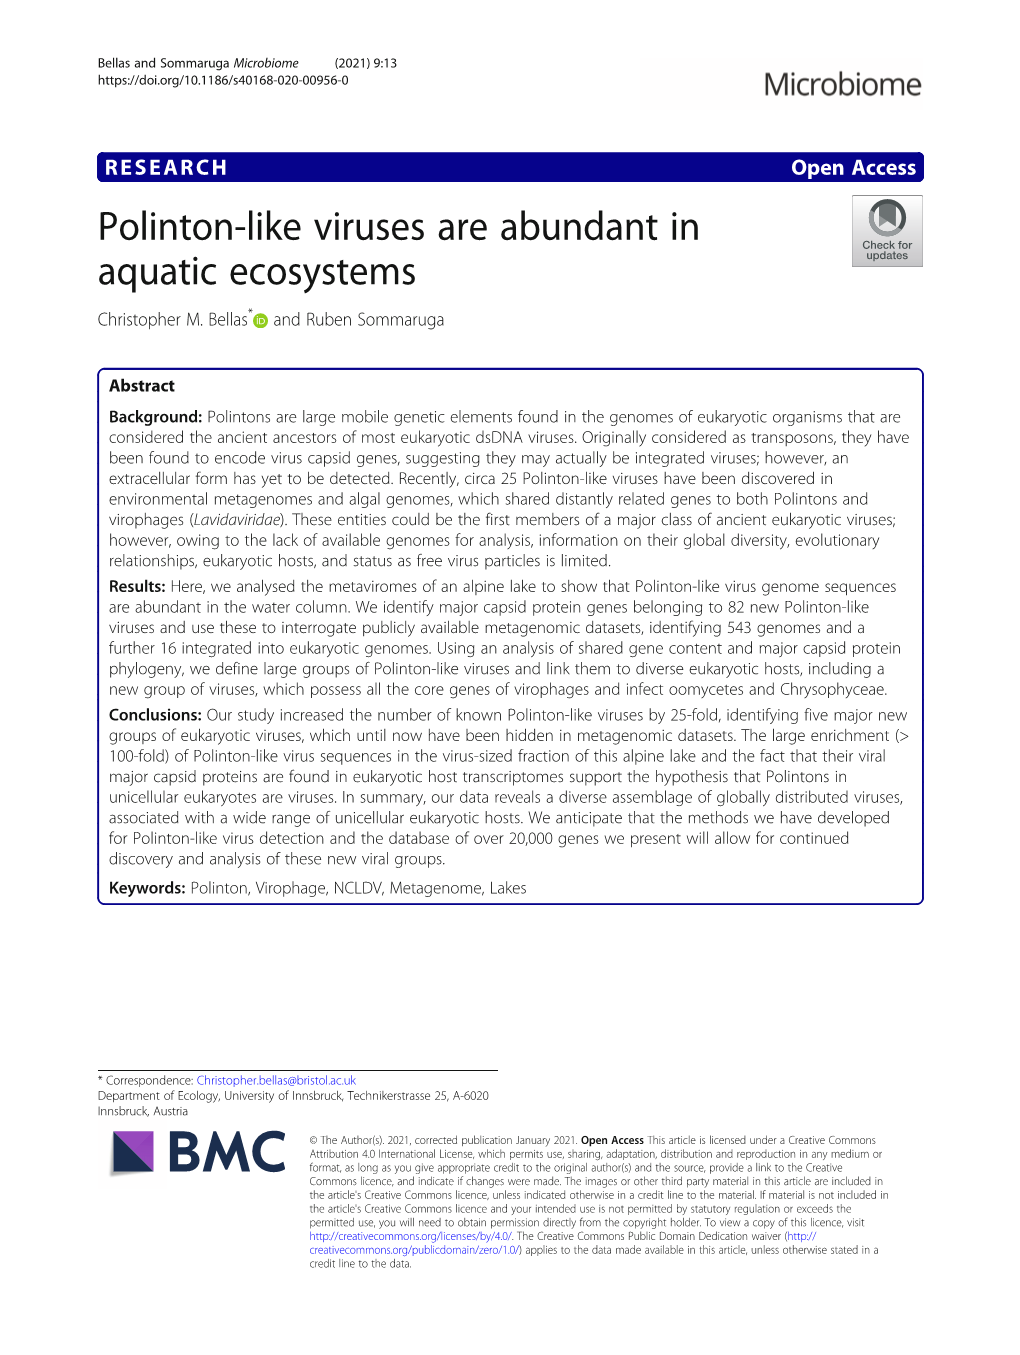 Polinton-Like Viruses Are Abundant in Aquatic Ecosystems Christopher M